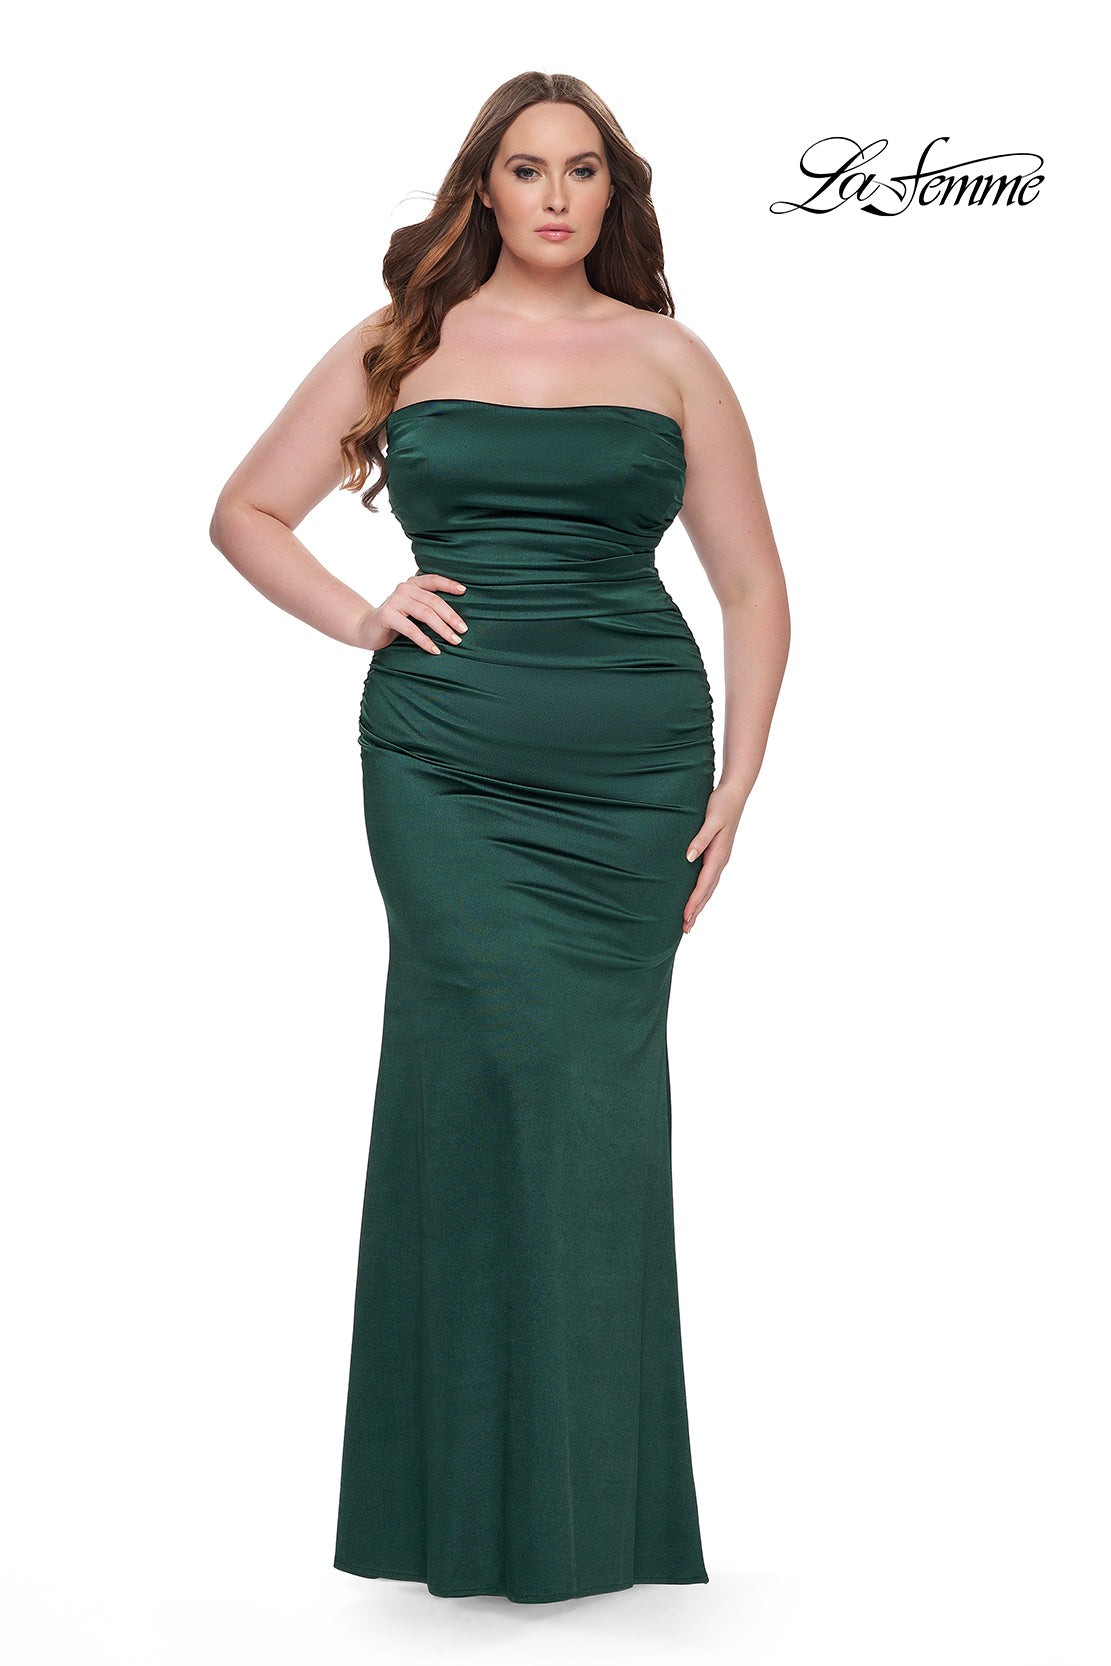 La-Femme-32194-Square-Neckline-Zipper-Back-Ruched-Liquid-Jersey-Column-Fitted-Dark-Emerald-Evening-Dress-B-Chic-Fashions-Prom-Dress